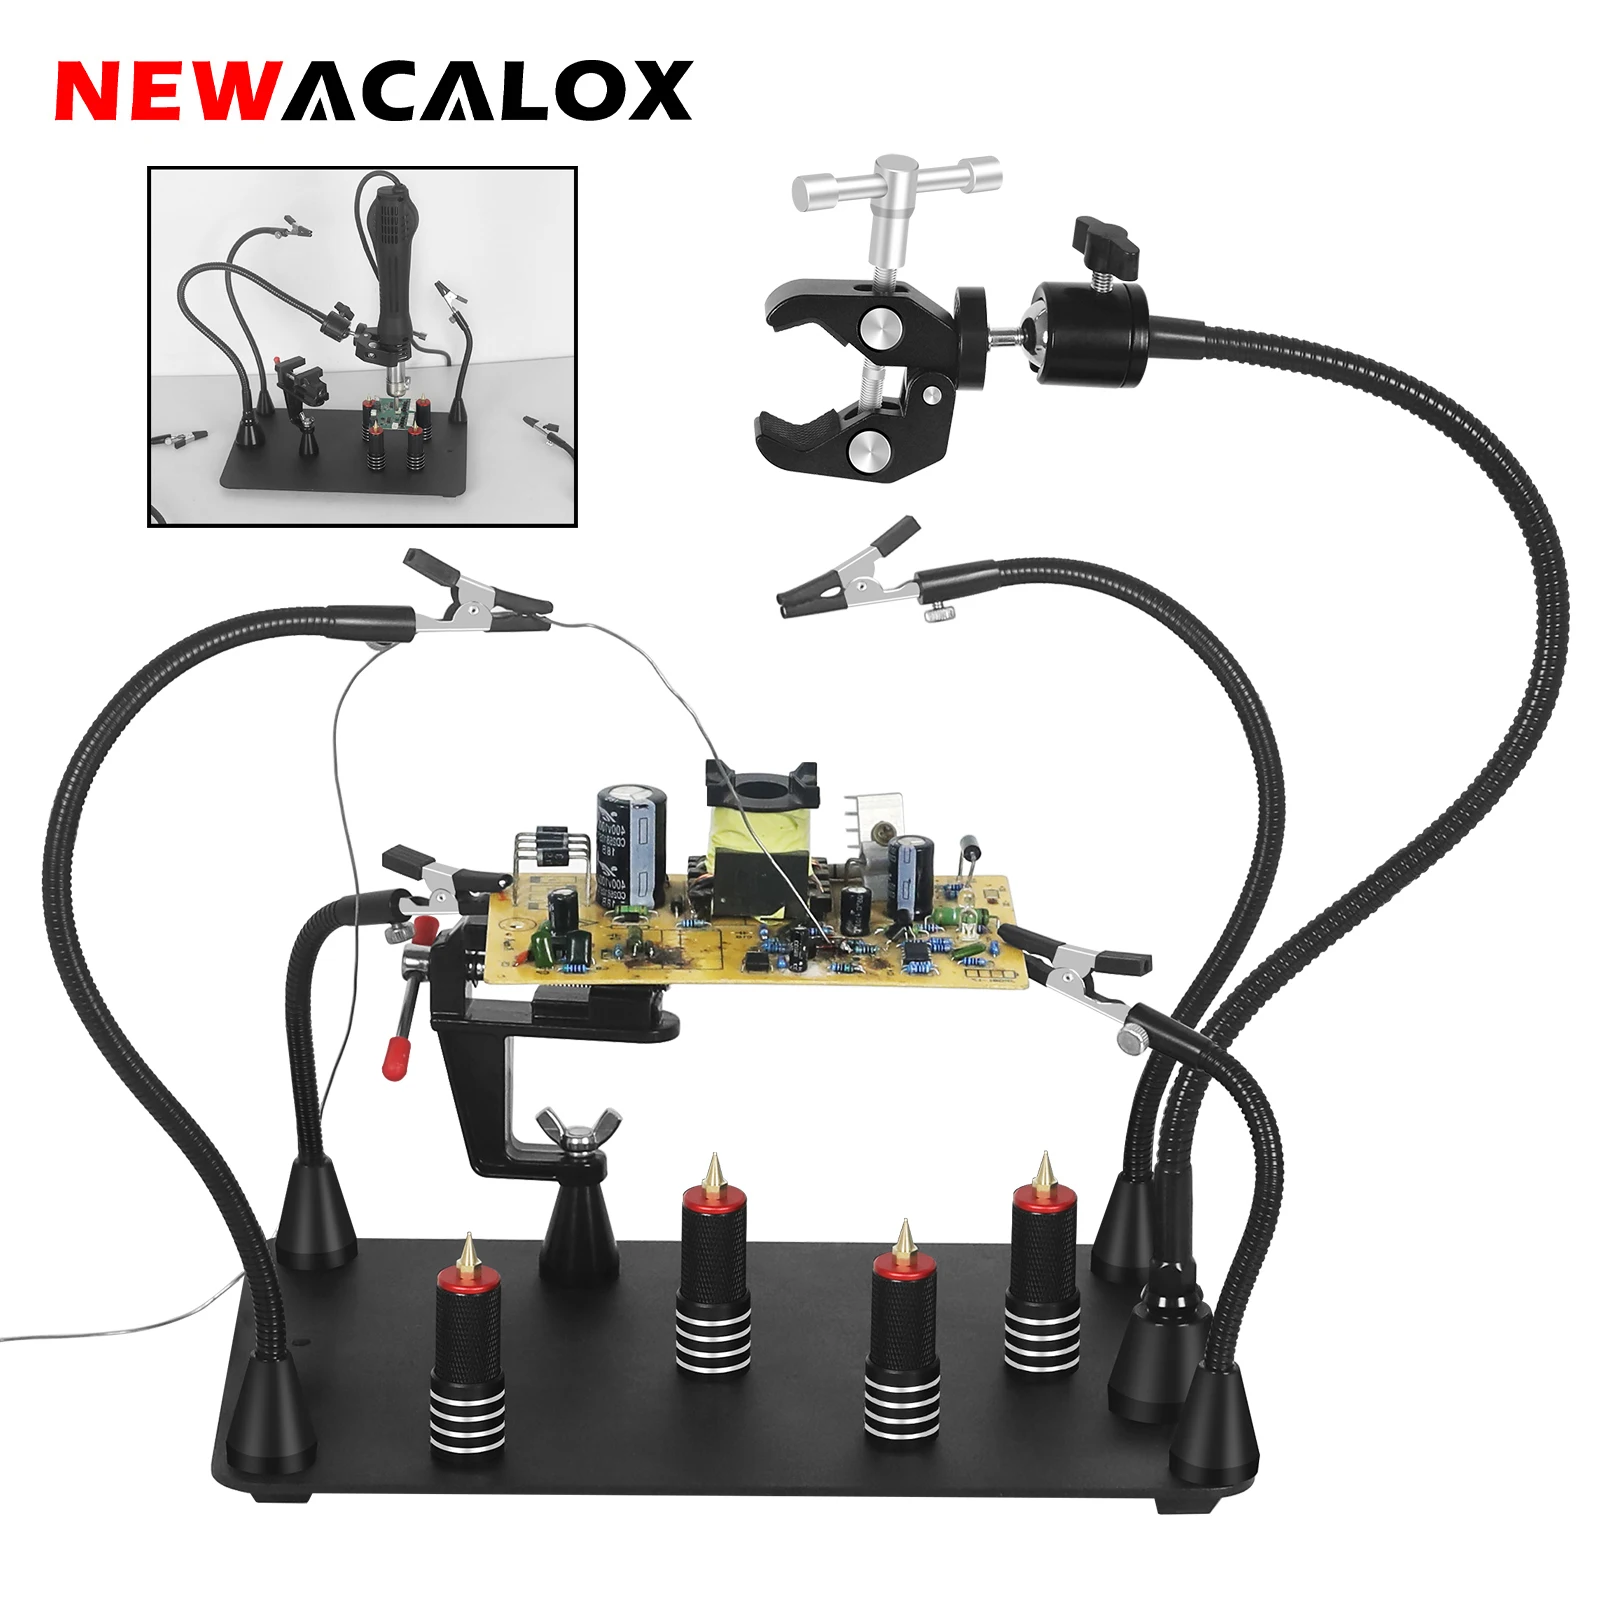 

NEWACALOX Magnetic Base Flexible Welding Third Hand Heat Gun Holder PCB Repair Clip Heavy Duty Soldering Maintenance Workbench